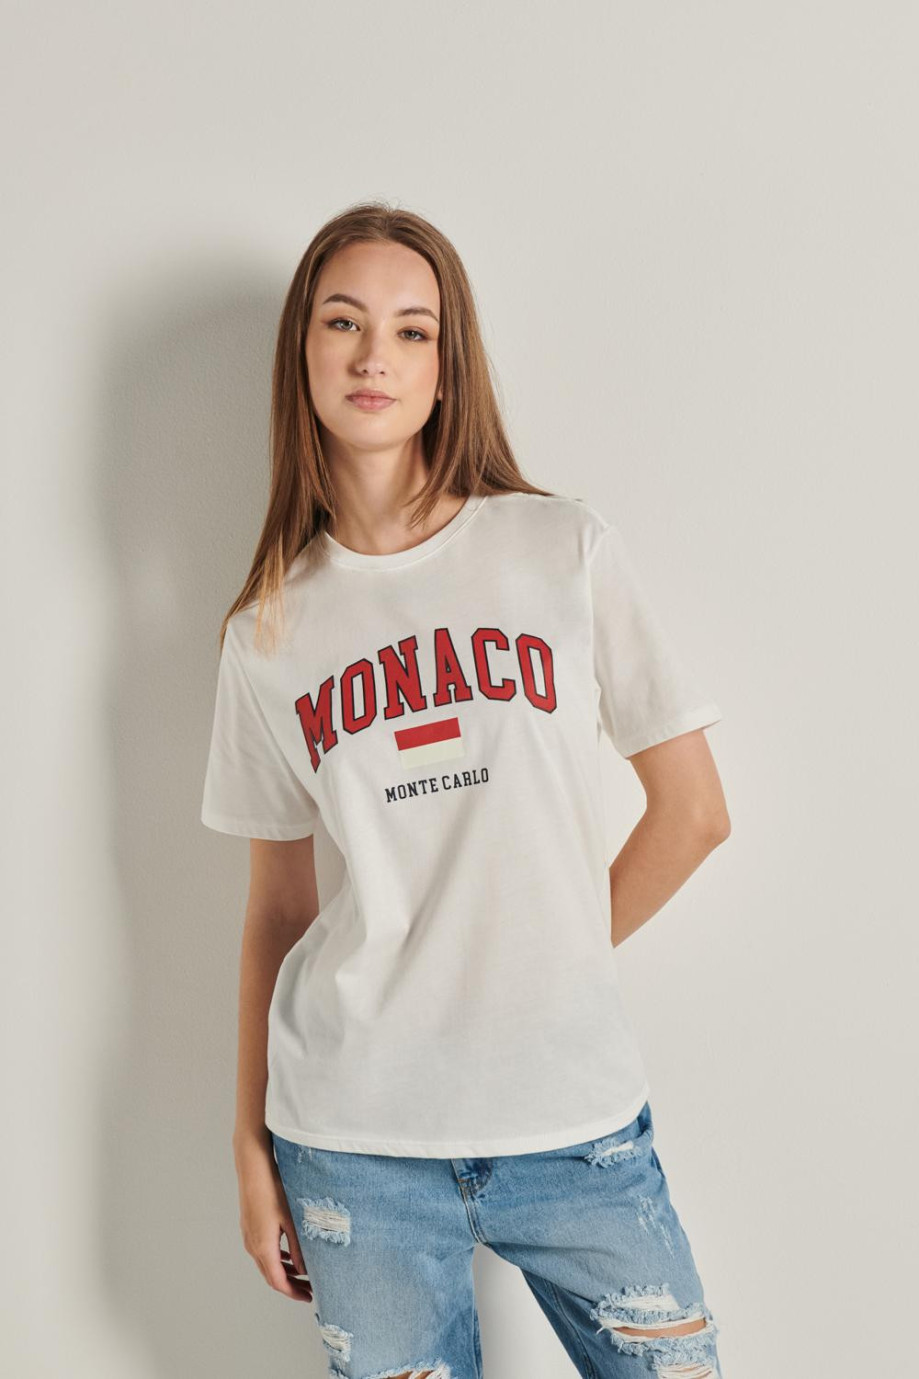 Camiseta unicolor oversize con manga corta y diseño college de Mónaco